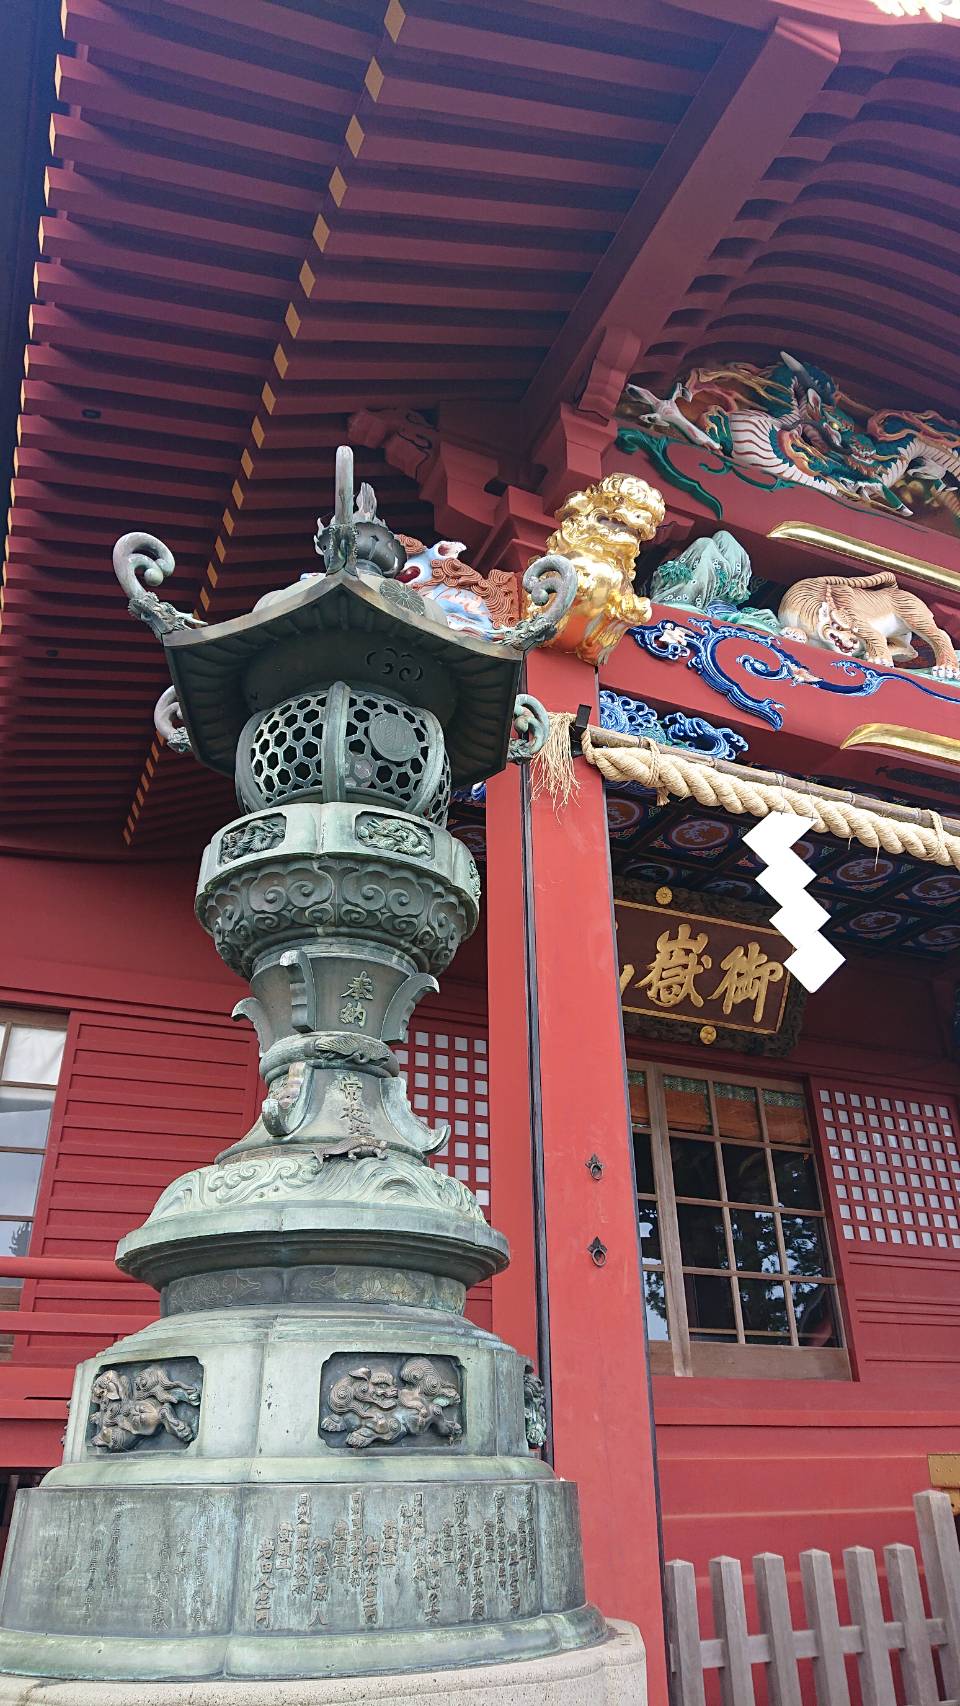 武蔵御嶽神社の写真